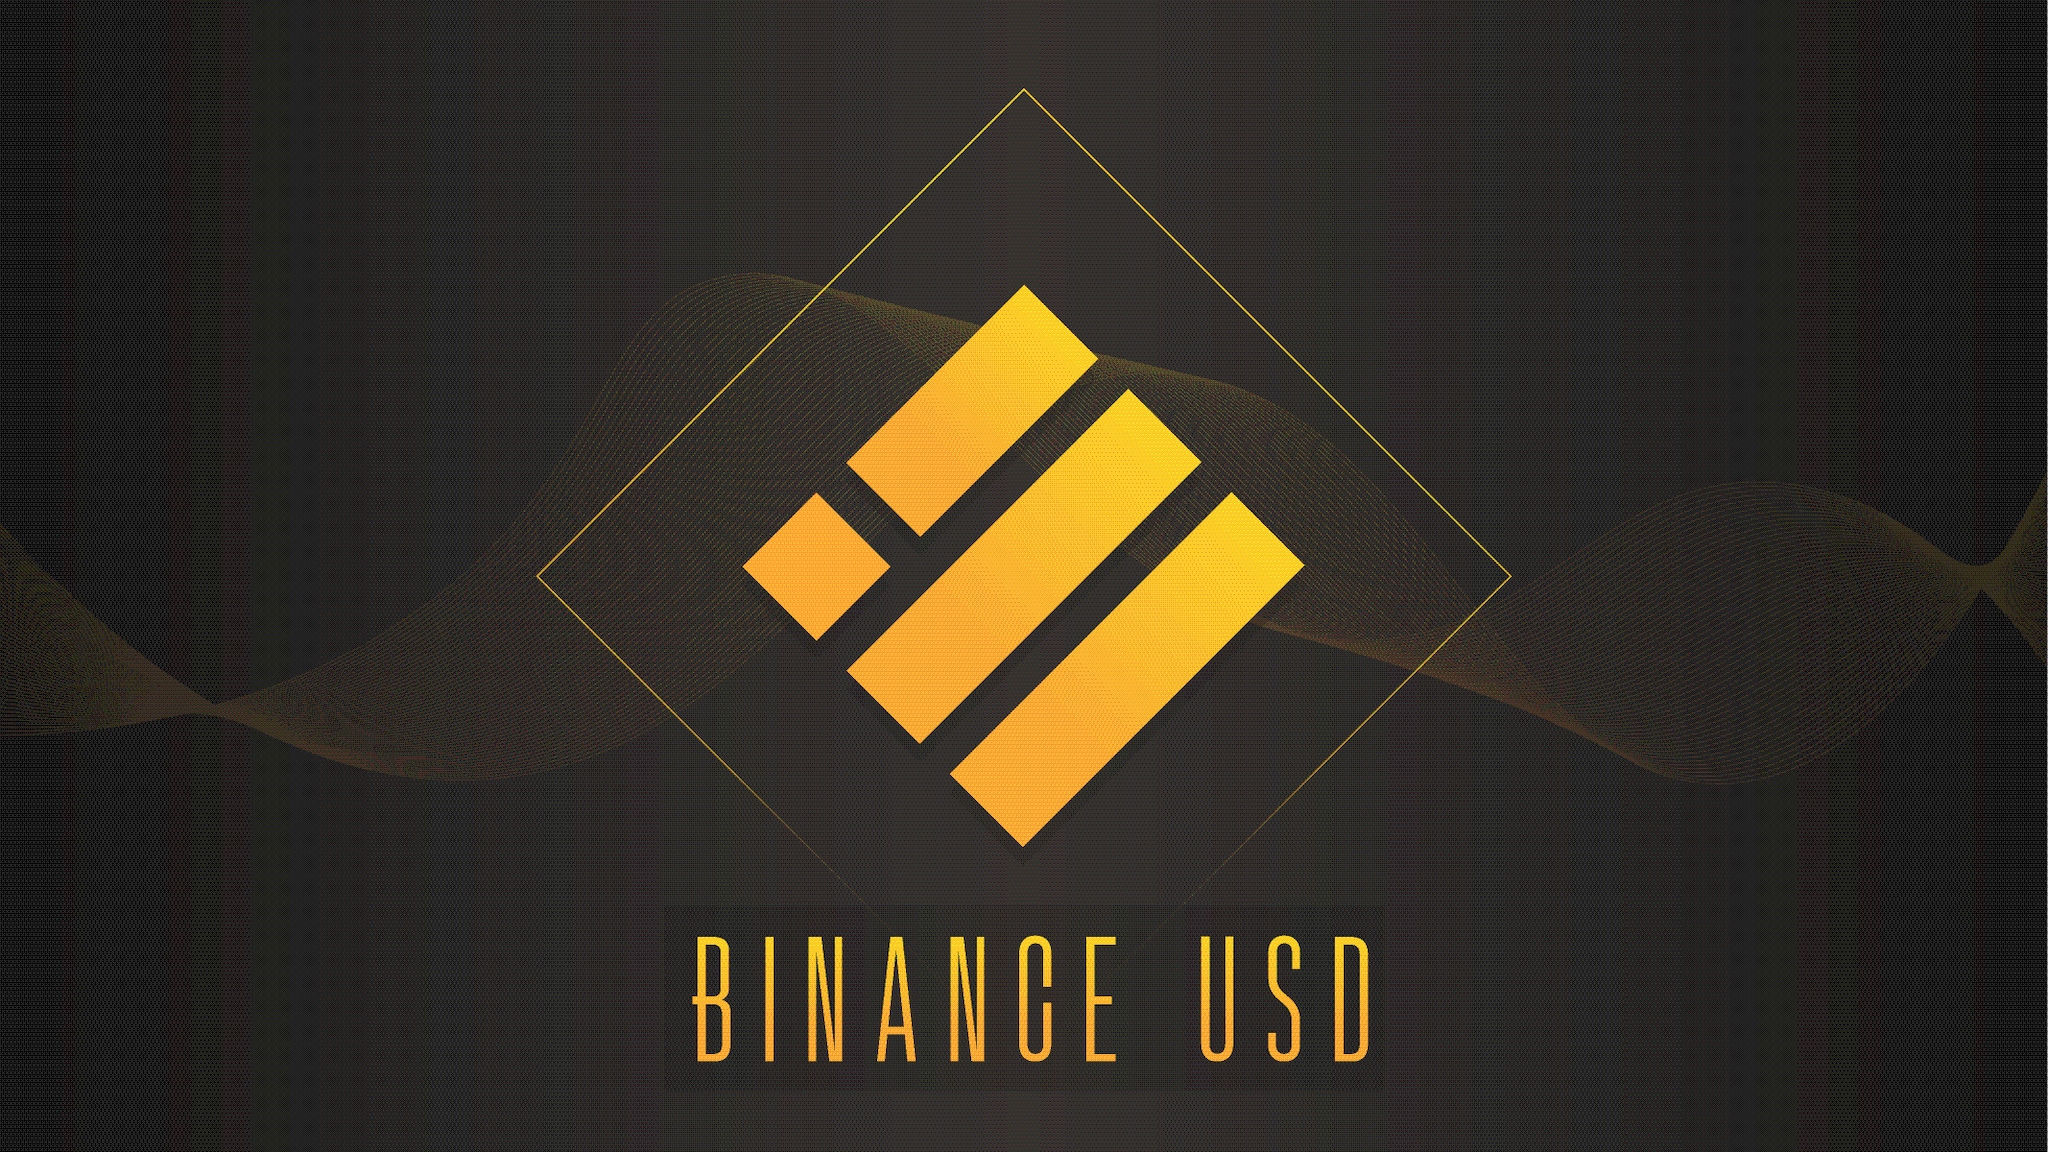     10. Binance USD: $ 1, 24-hour change: -0.06 percent, 7-day change: 0.02 percent